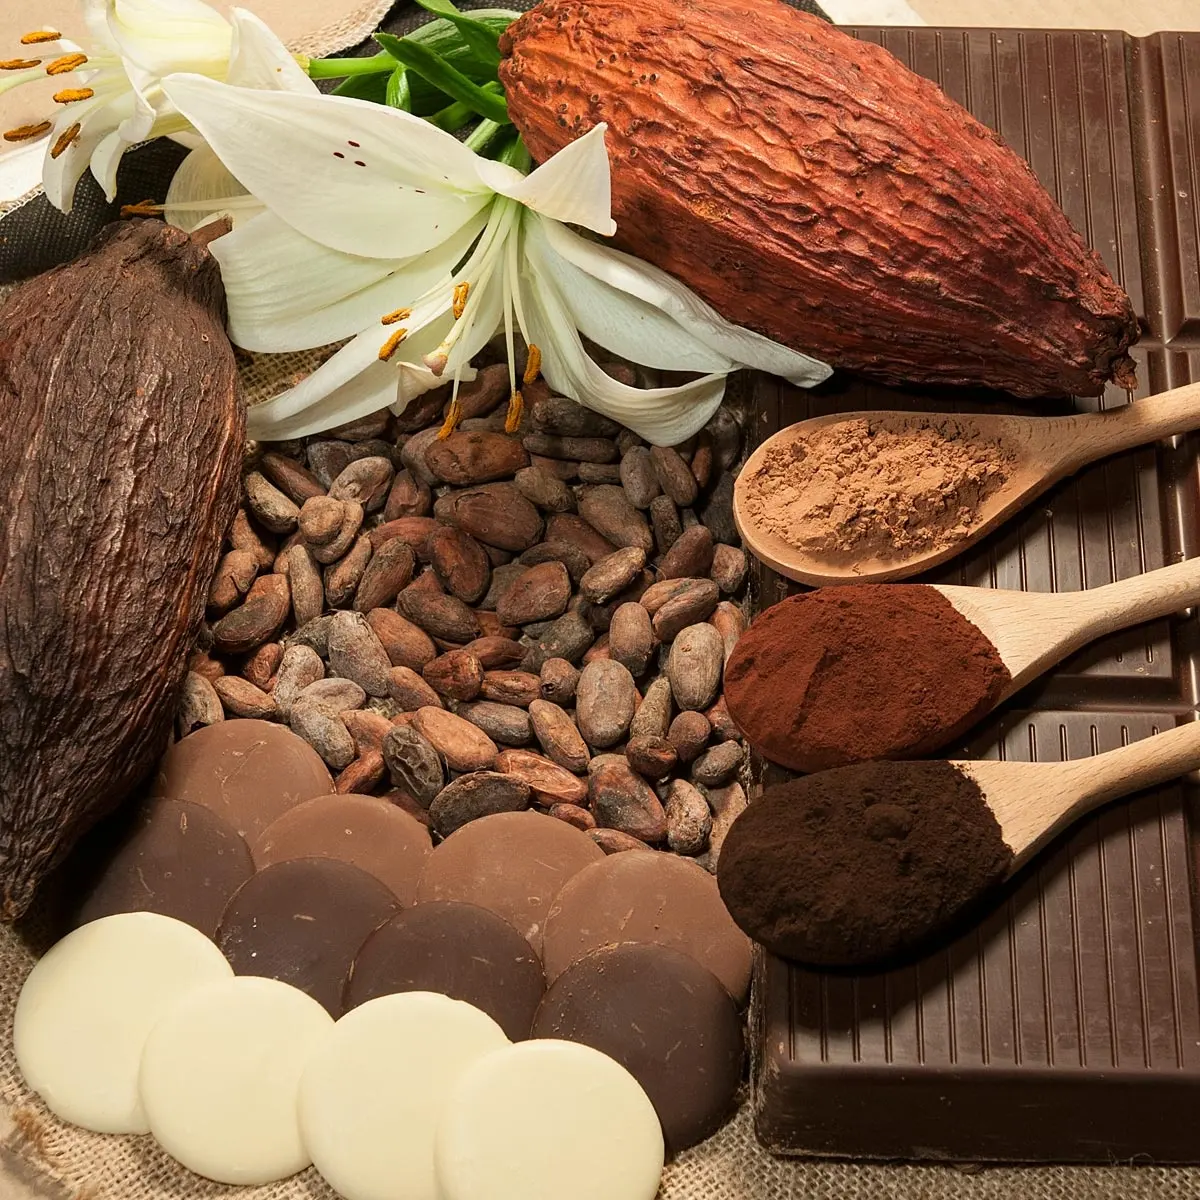 Cacao orgánico peruano de alta calidad en polvo Theobromina Cacao polvo crudo para la industria alimentaria